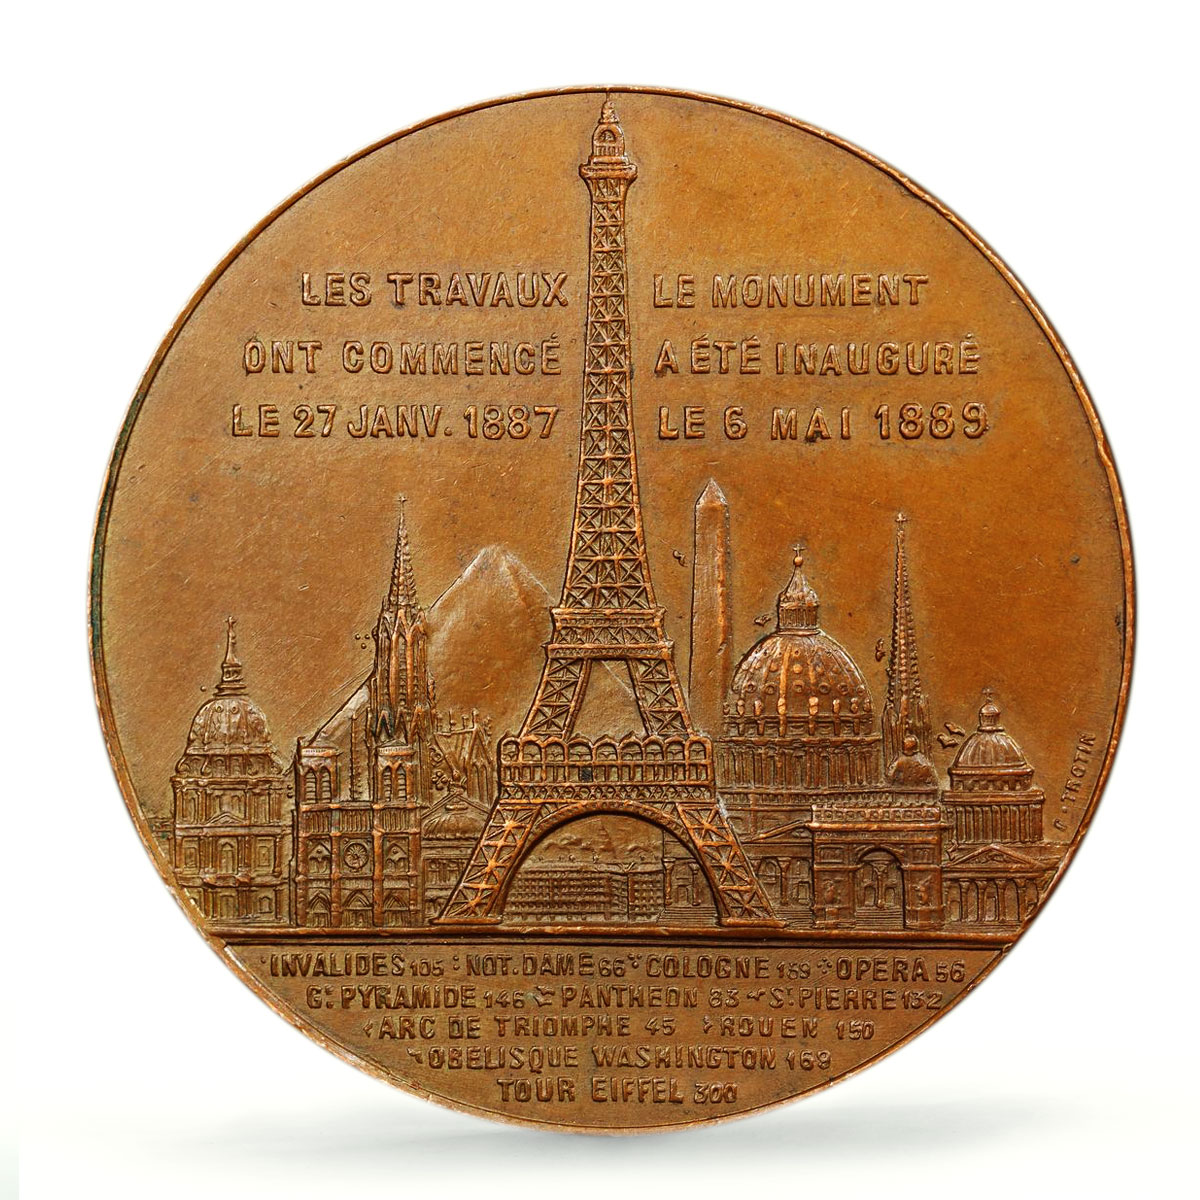 France Eiffel Tower Climb Charles Trotin MS62 PCGS copper token medal coin 1889